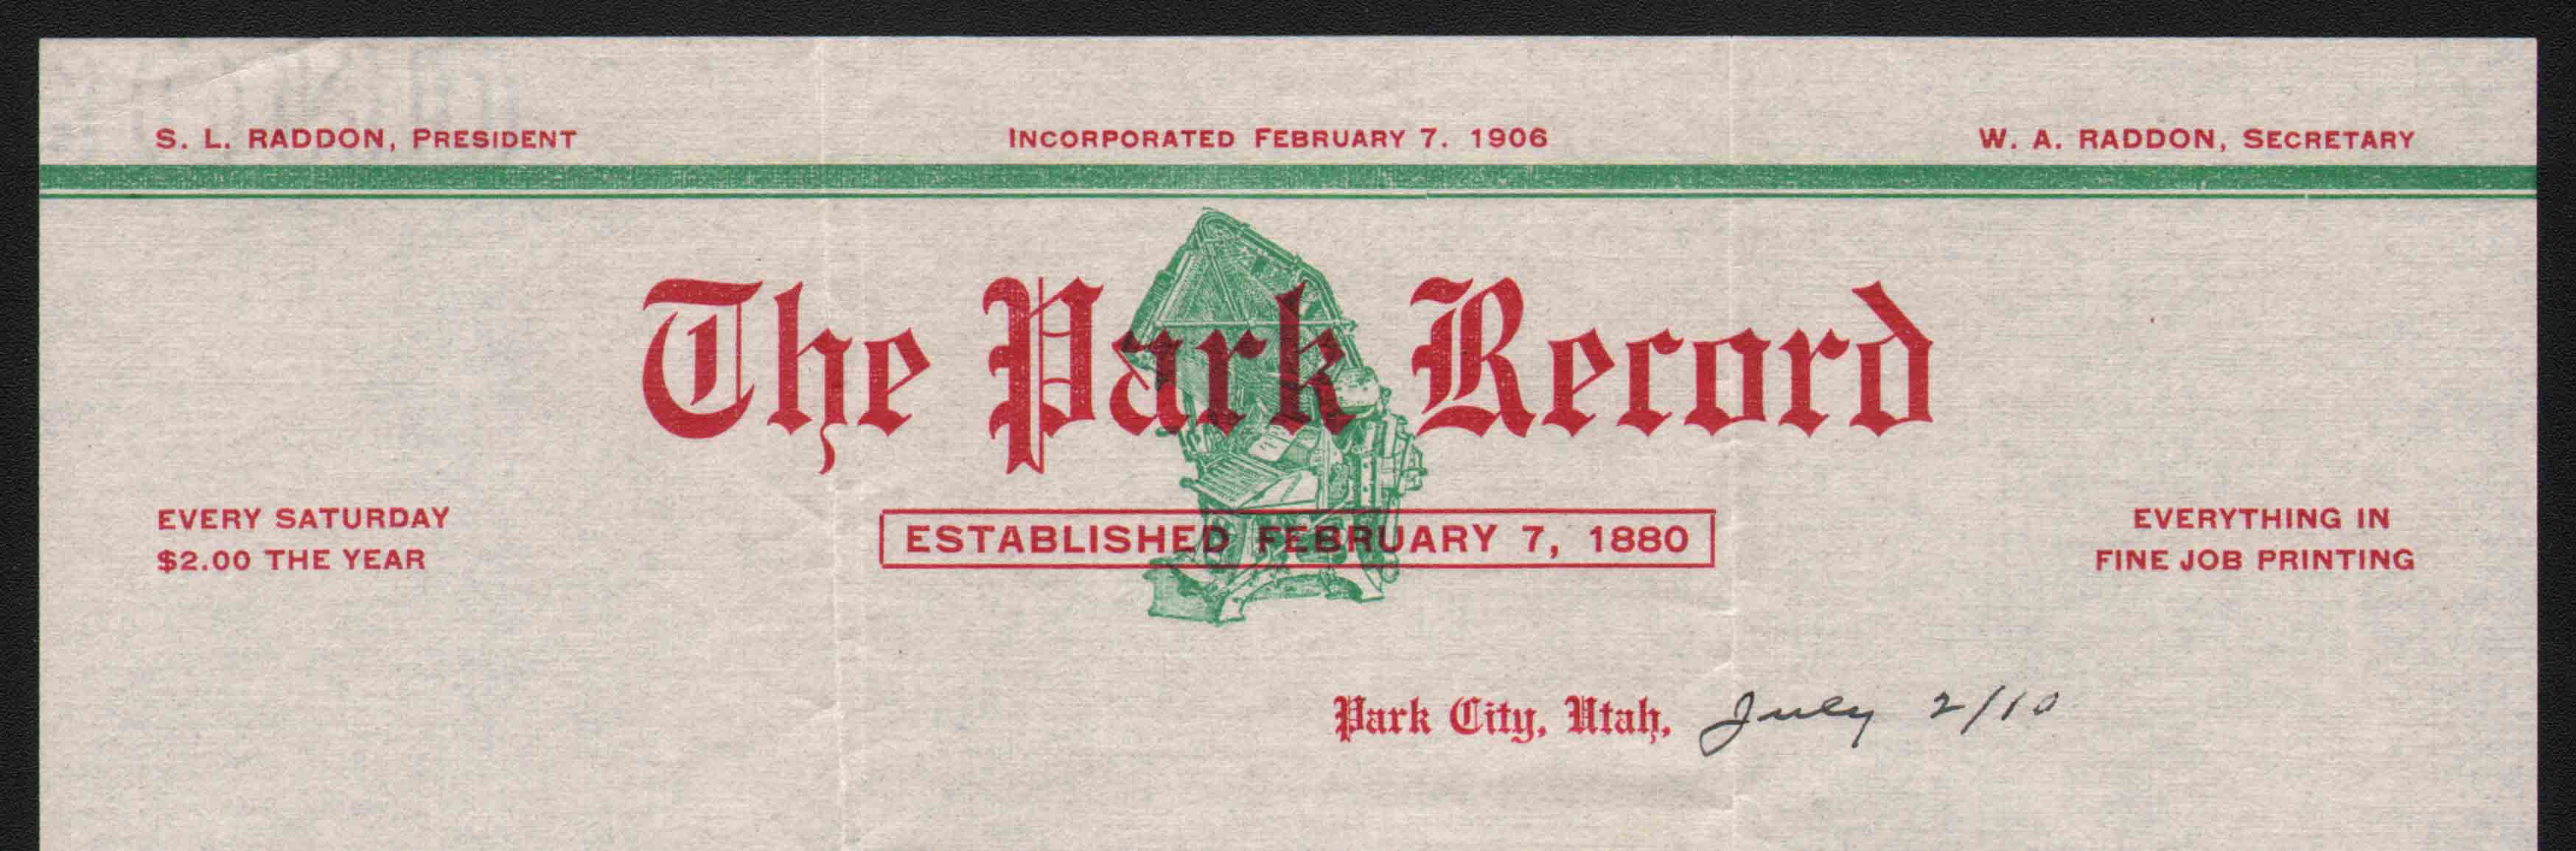 PARK_RECORD_LETERHEAD_1910.jpg